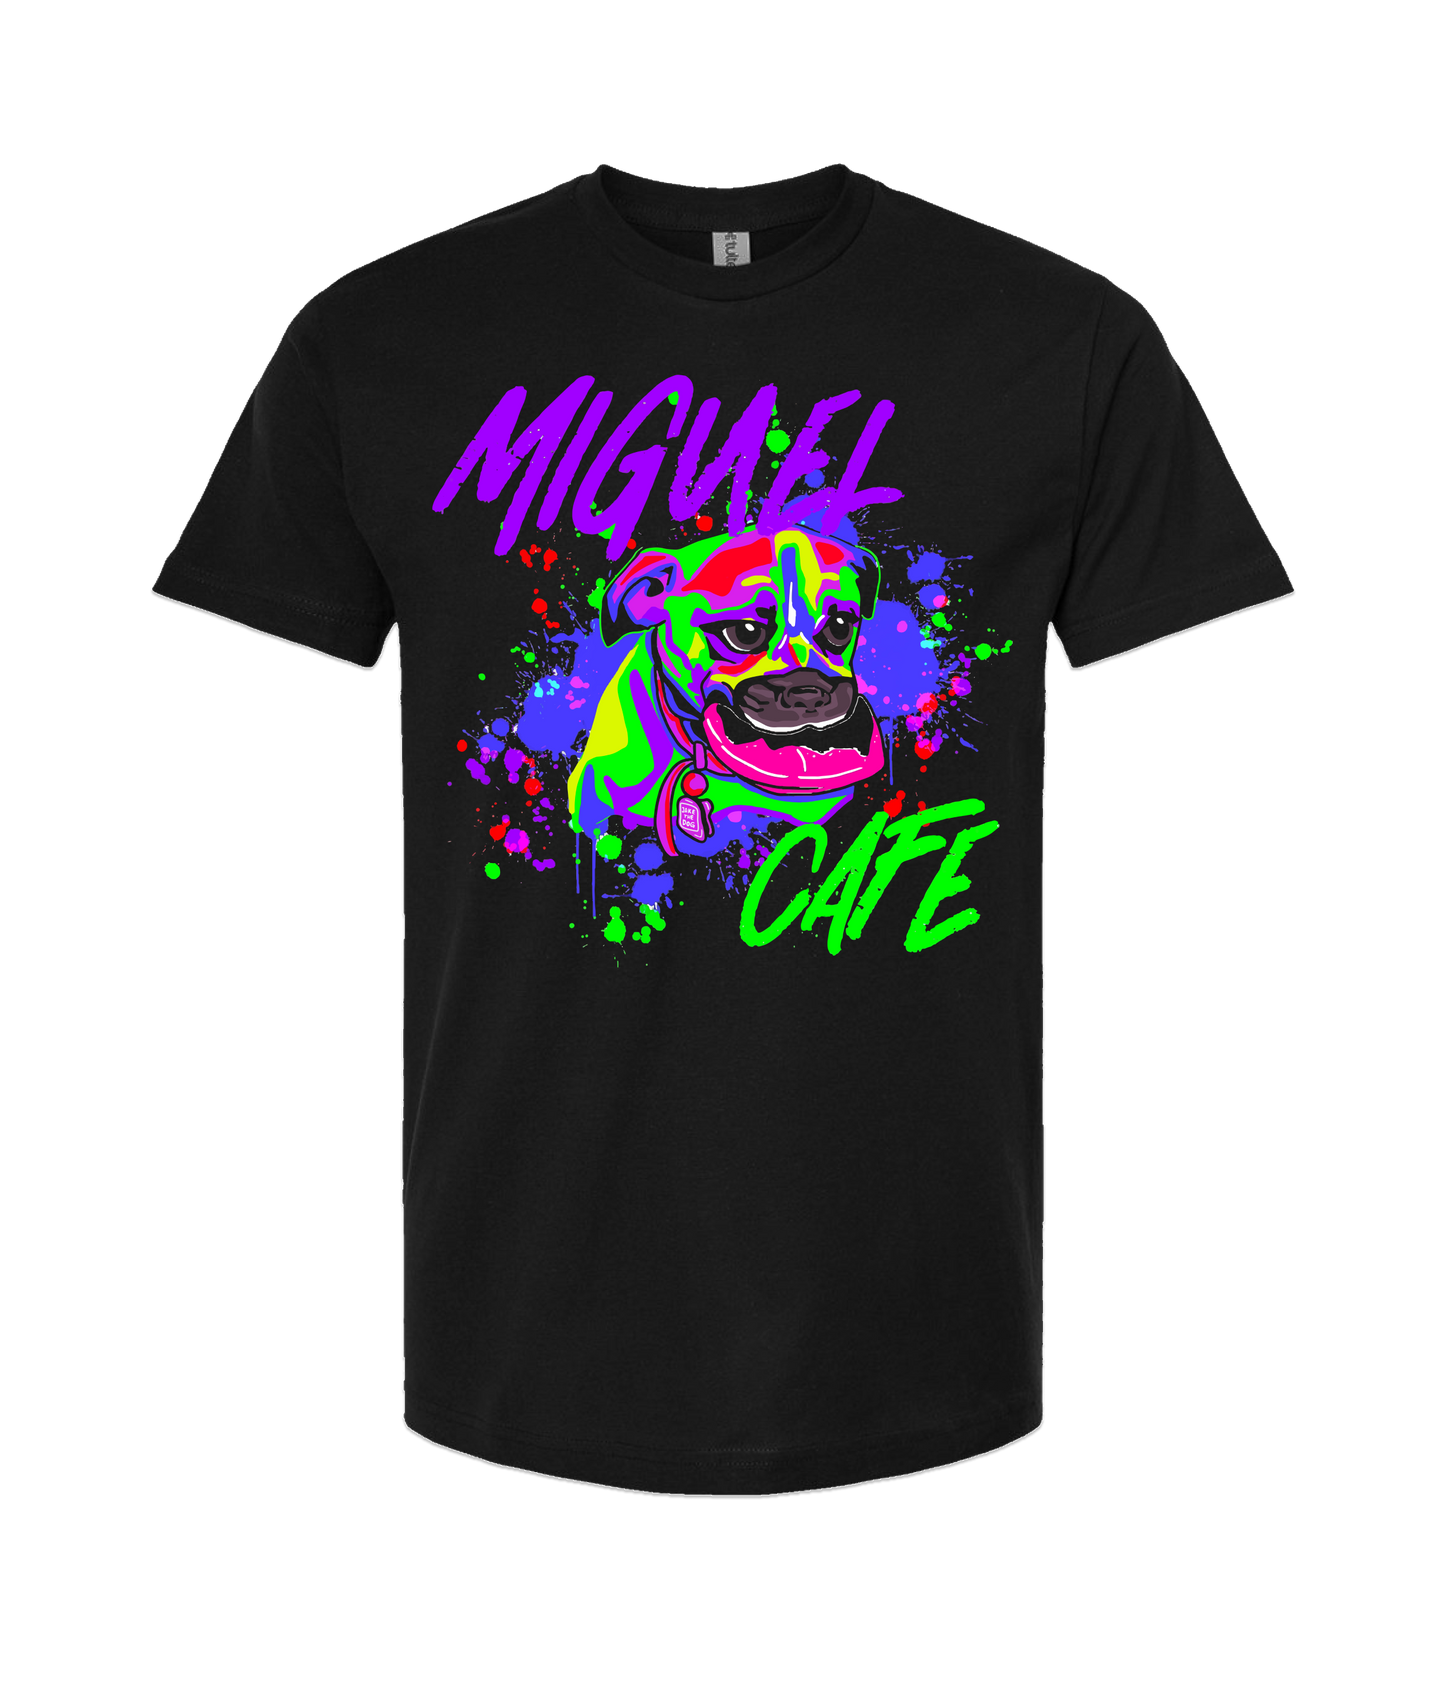 Miguel Cafe music - DOG - Black T-Shirt